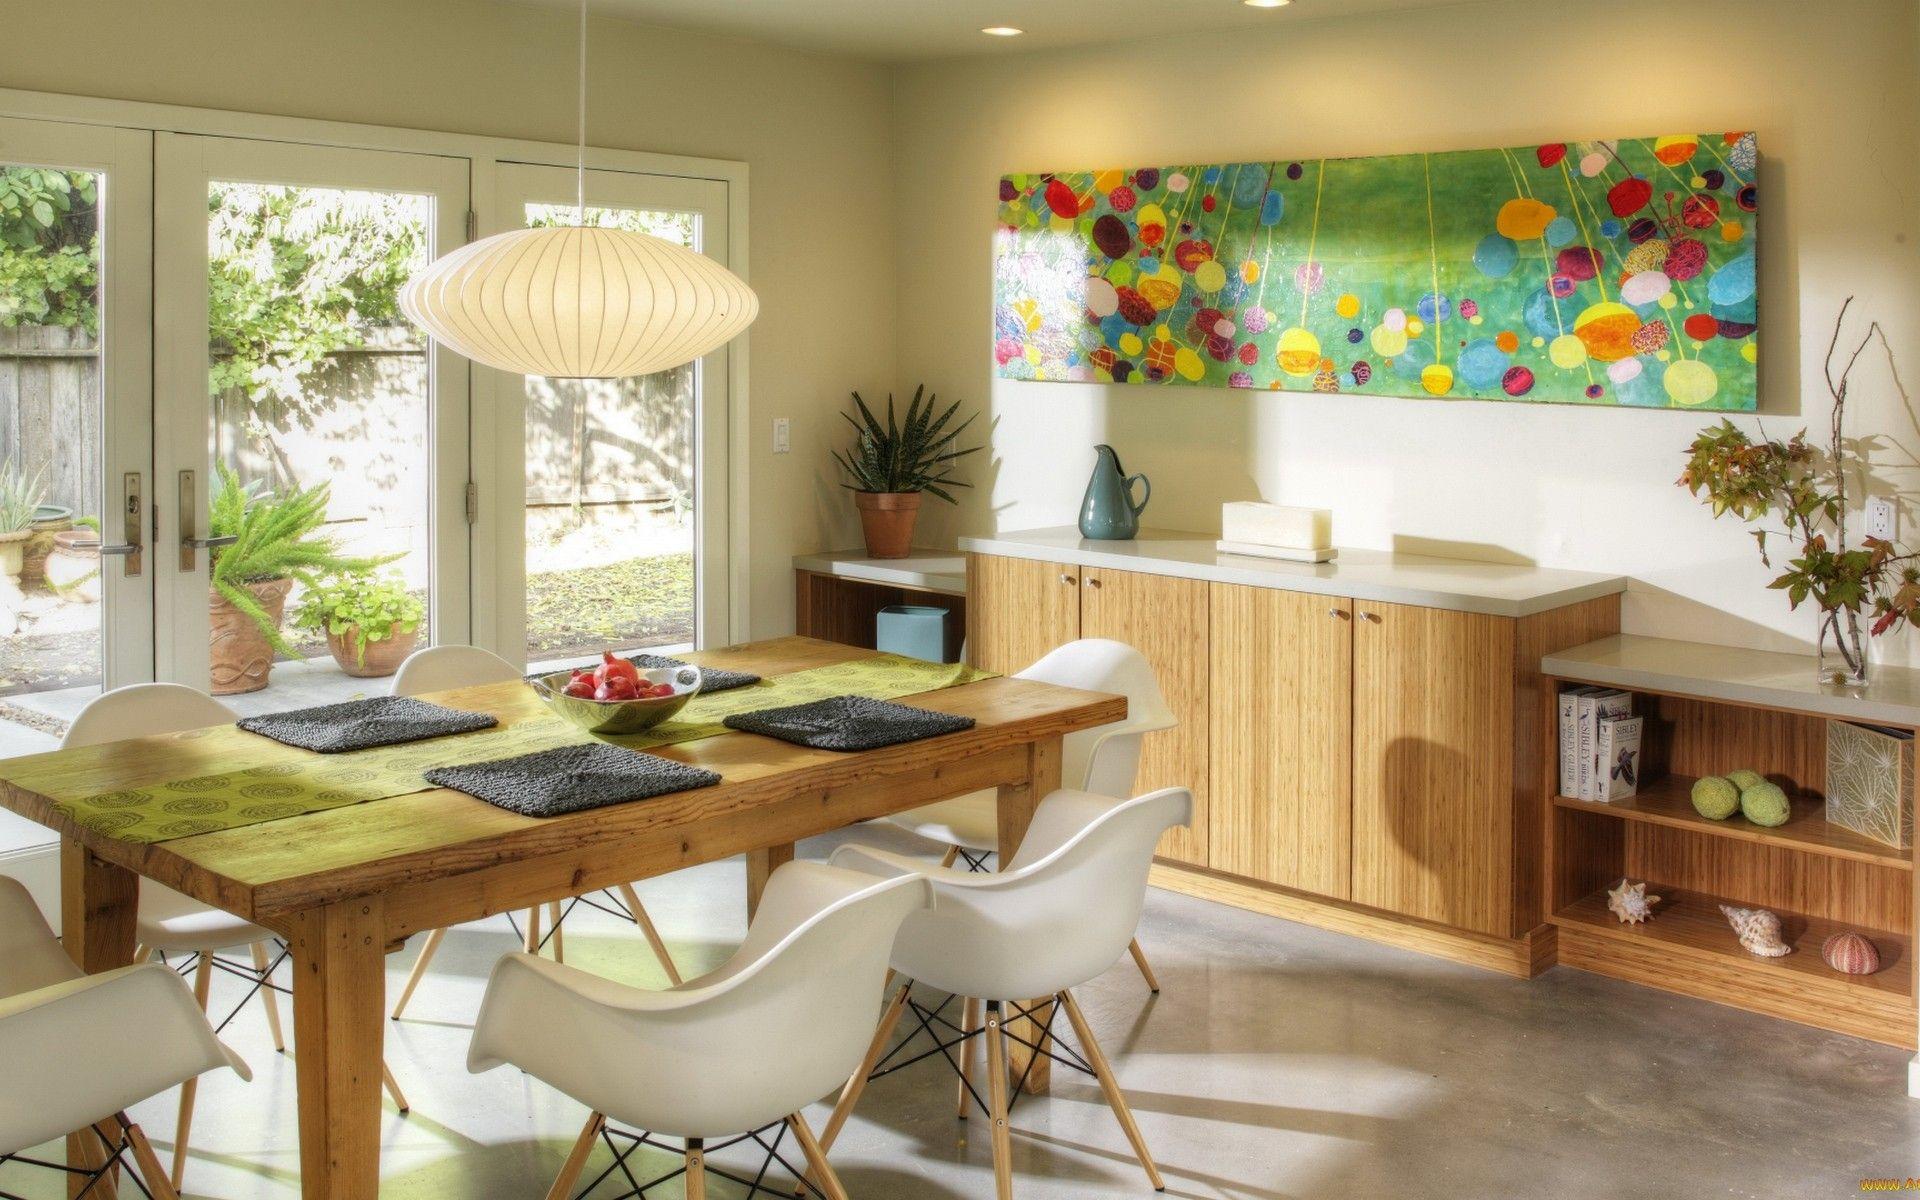 Kitchens wallpaper, picture of kitchen interior